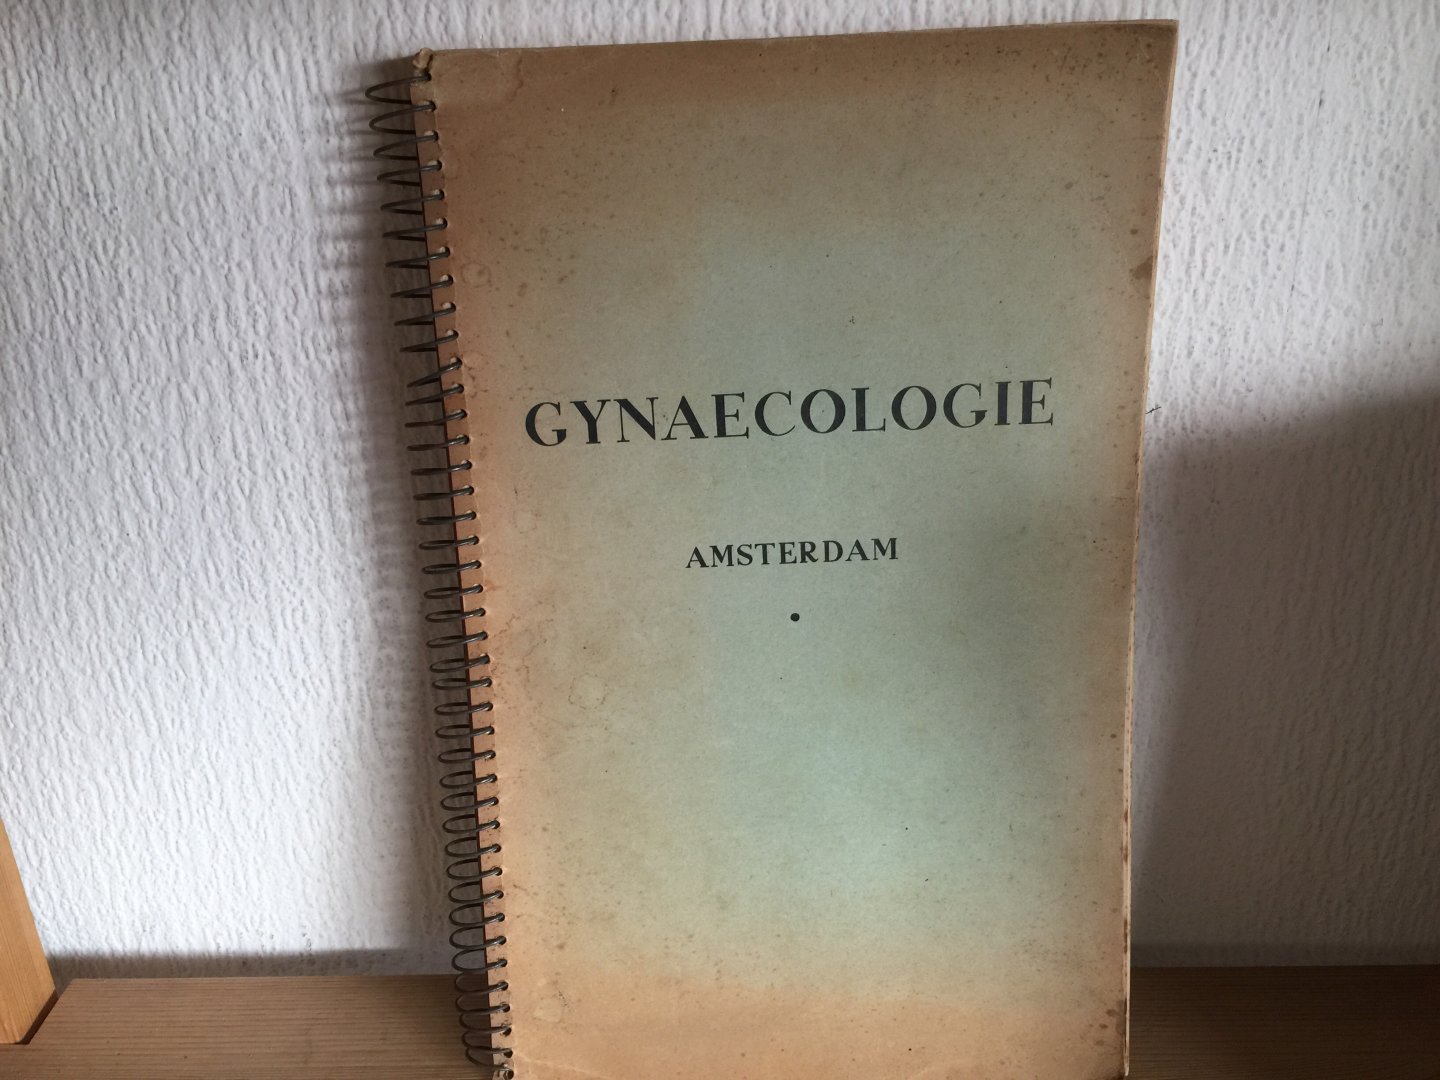  - GYNAECOLOGIE AMSTERDAM